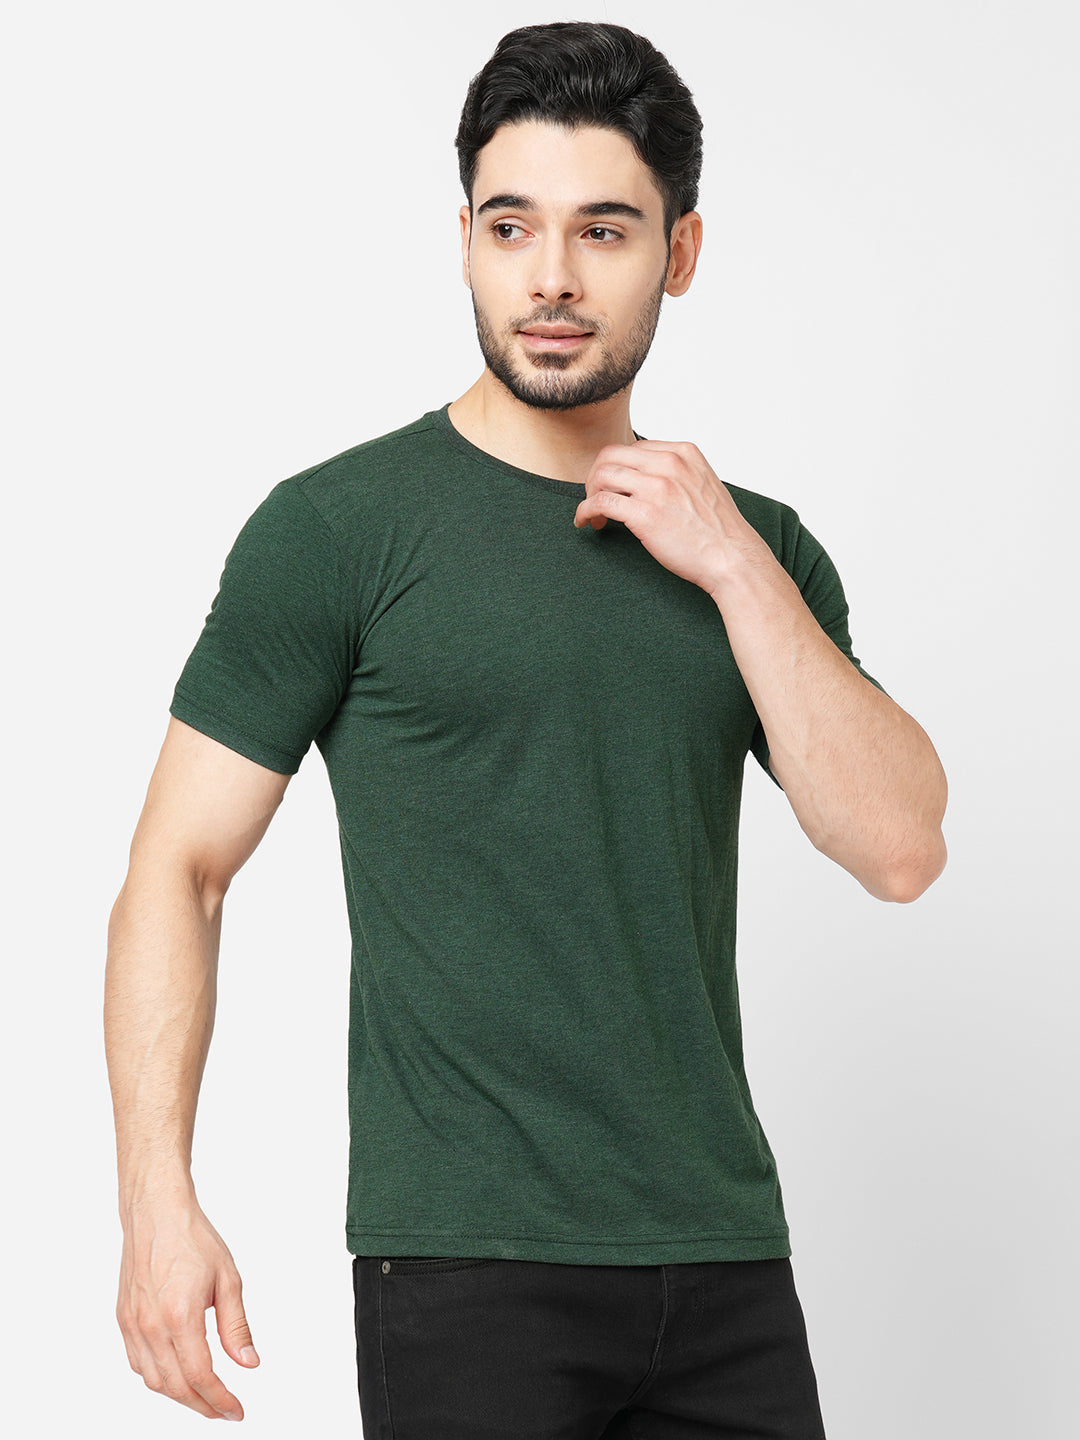 Basic Avocado Green T-Shirt